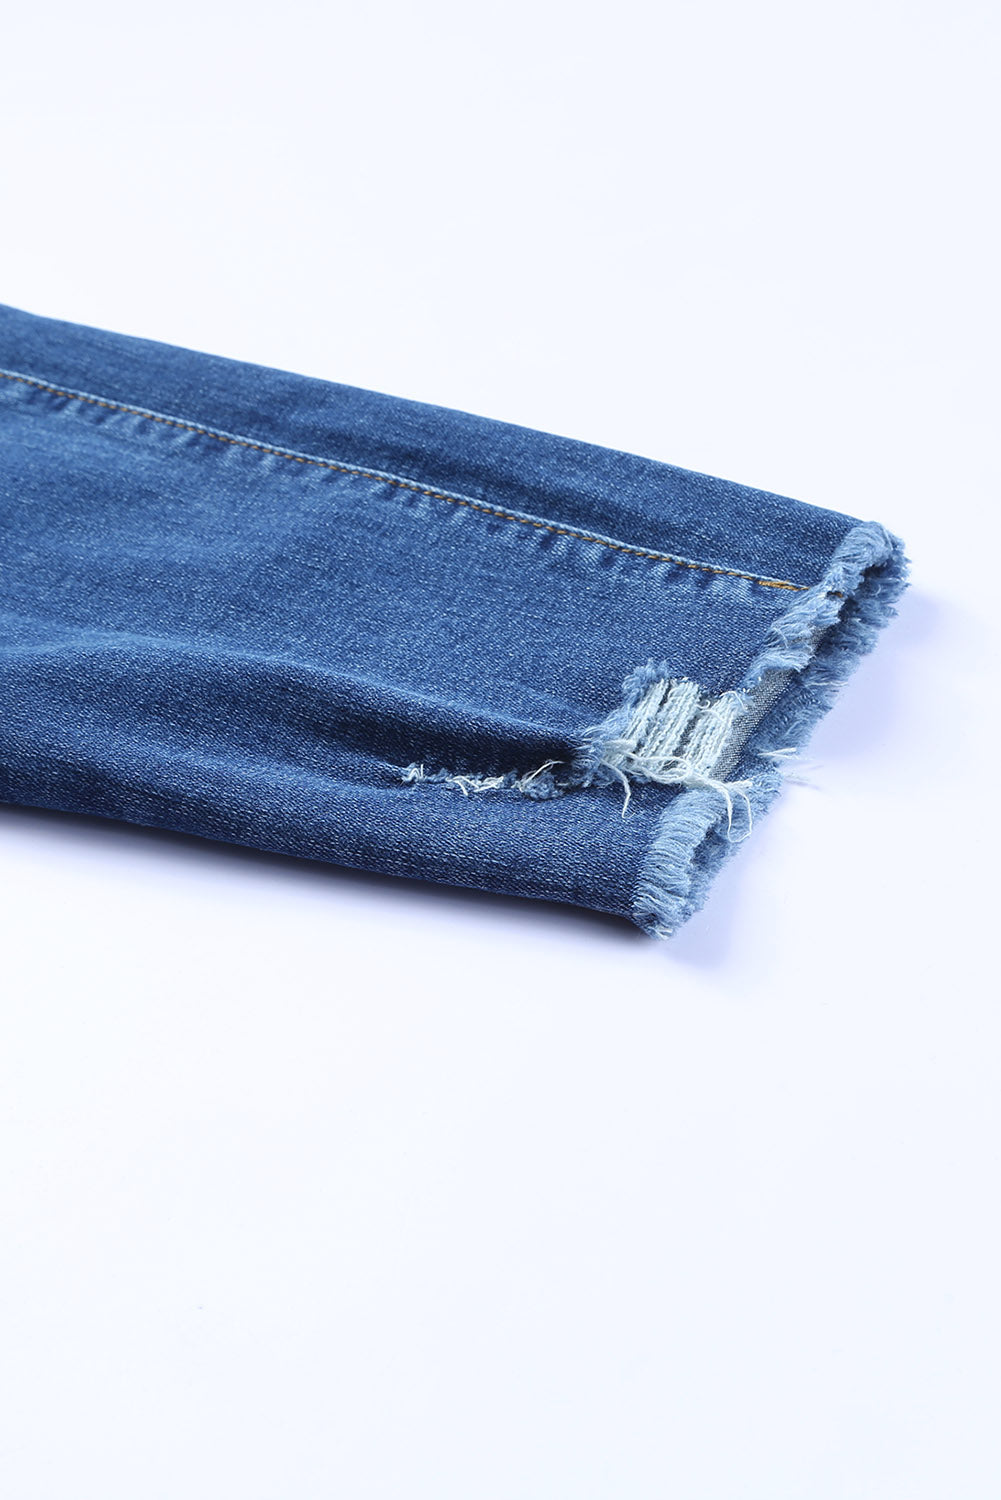 Blue Raw Hem Ankle-length Skinny Jeans Jeans JT's Designer Fashion